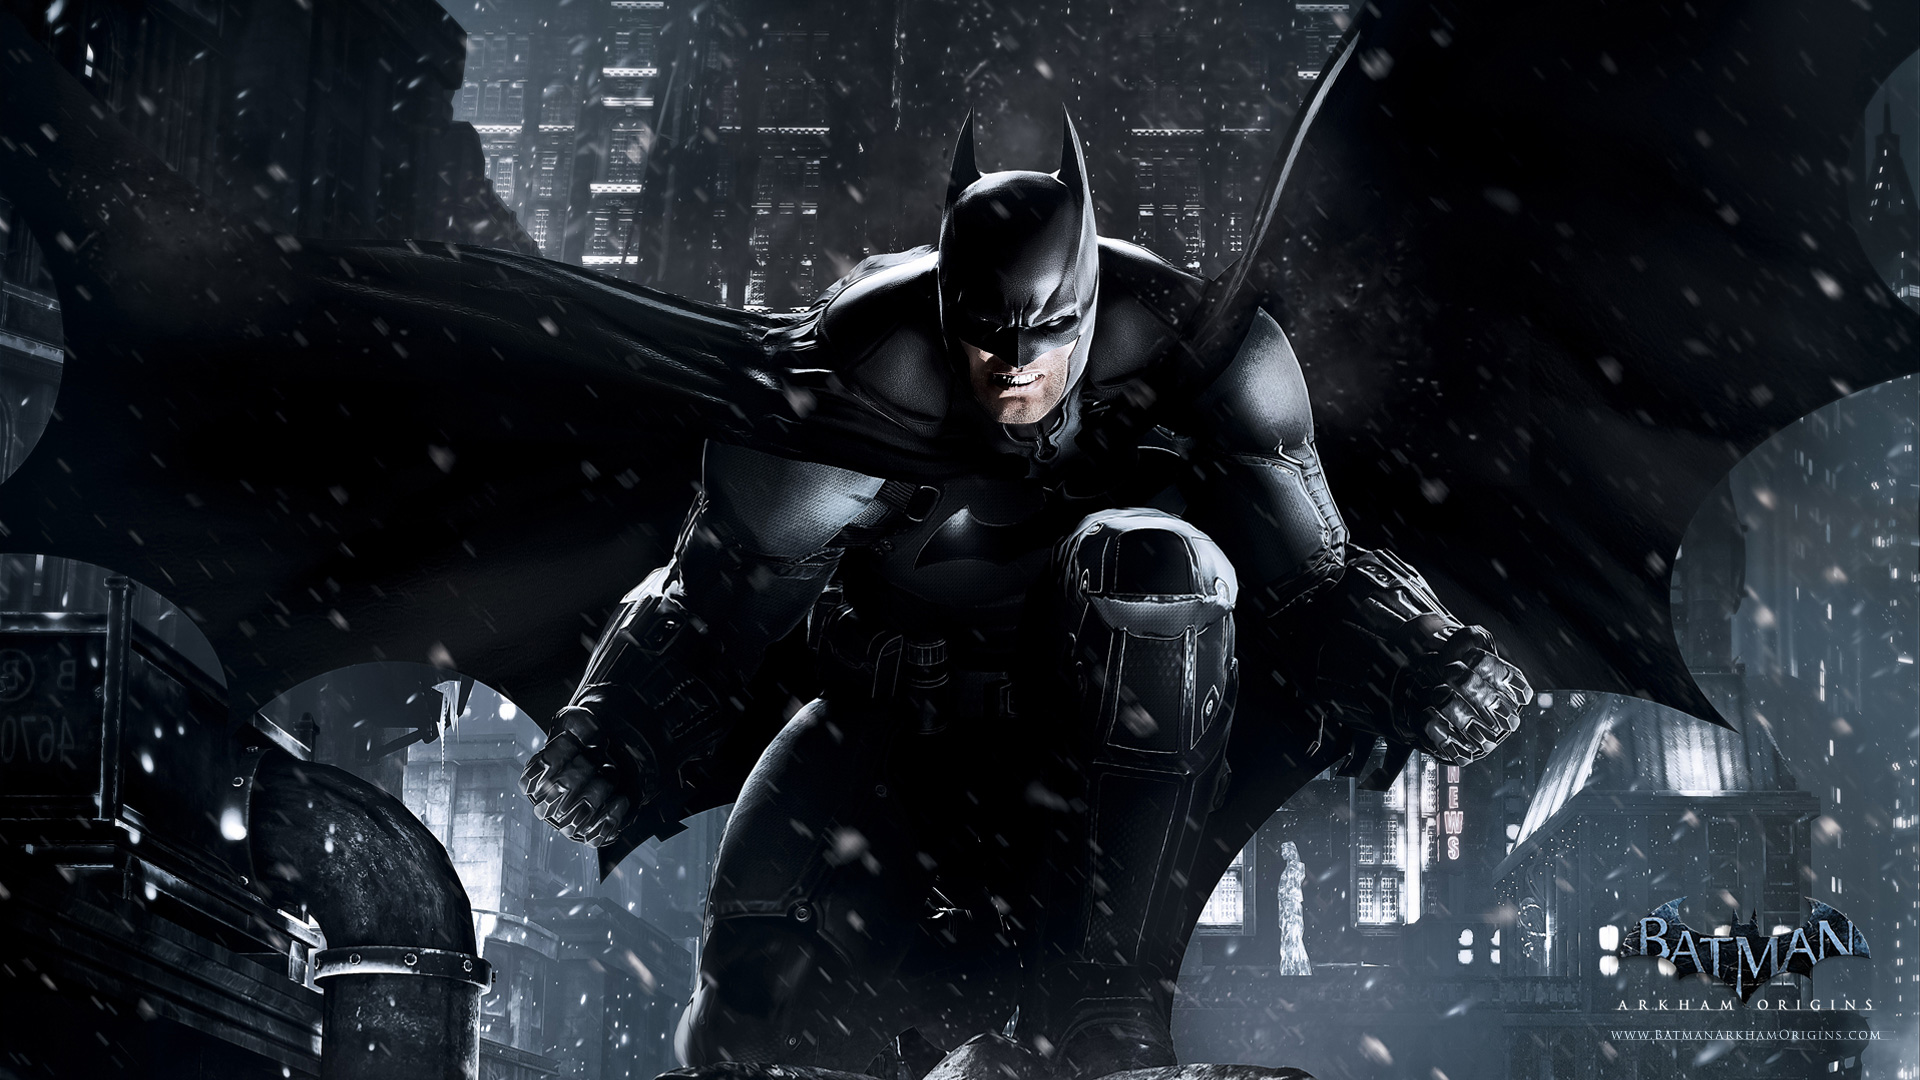 New Batman Arkham Origins Image Emerge Online Lightning Gaming News